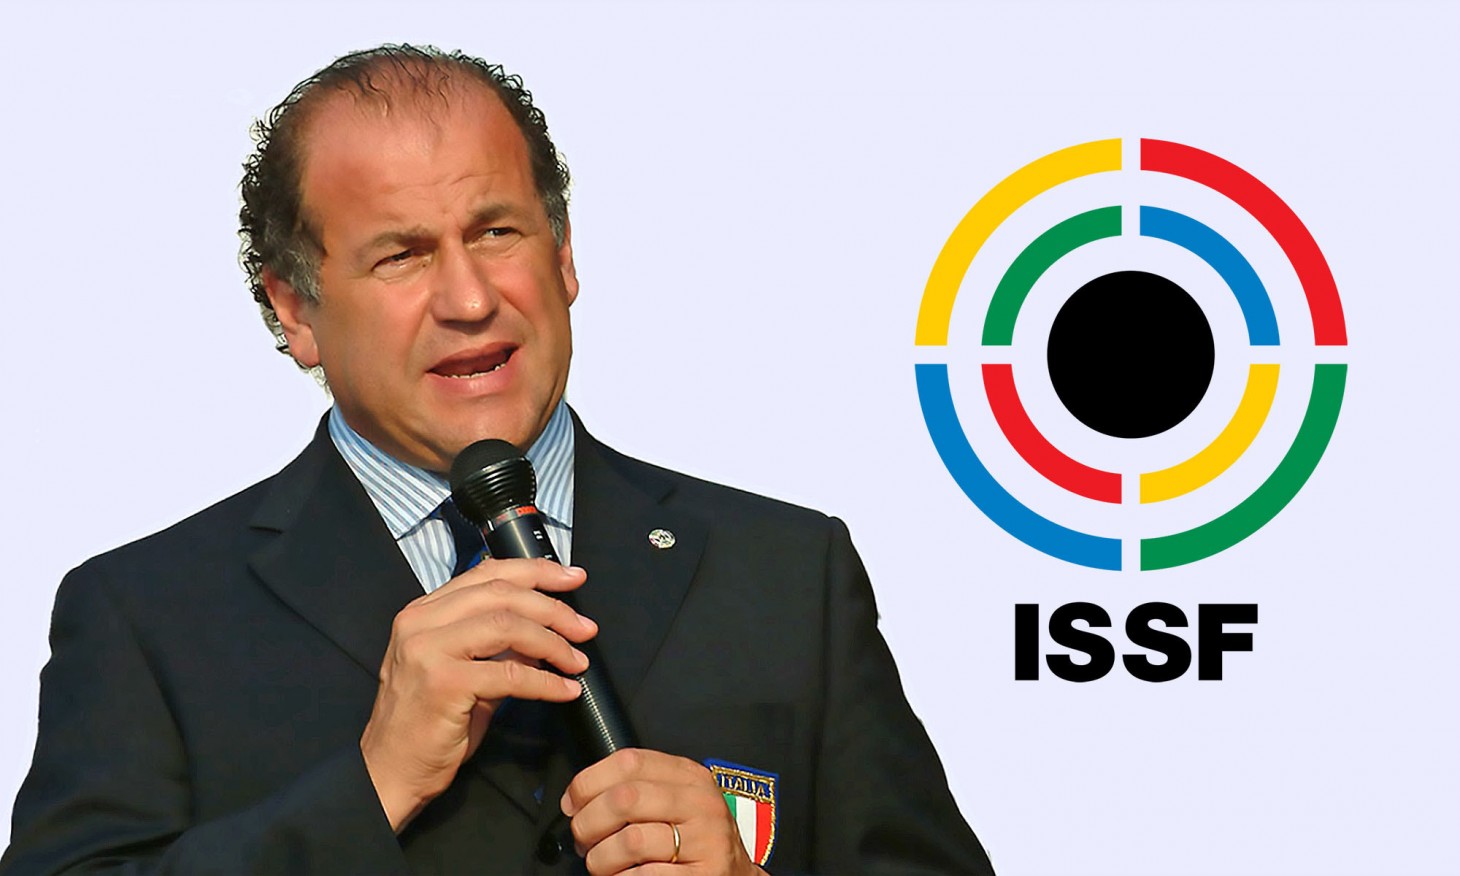 New ISSF President Rossi to meet IOC over Los Angeles 2028 venue arrangements